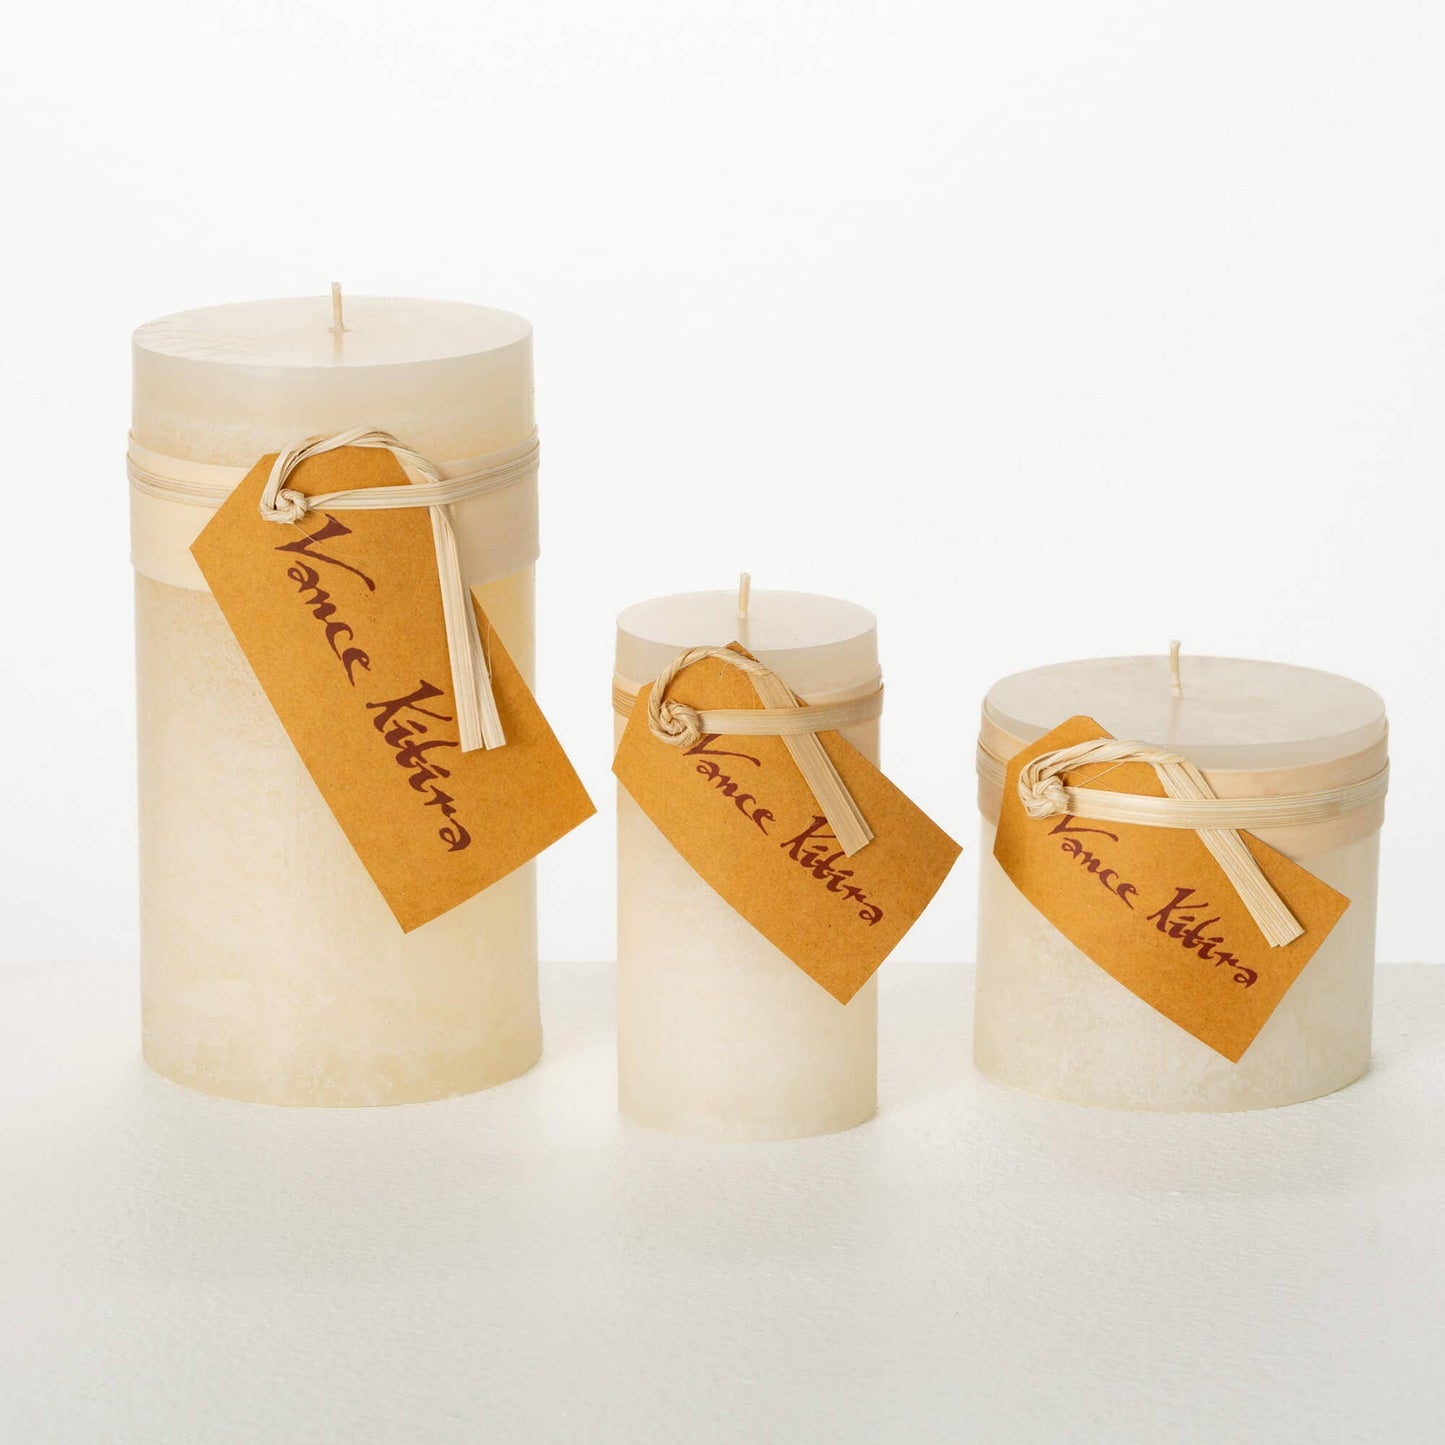 6" x 3" Pillar Candle - White